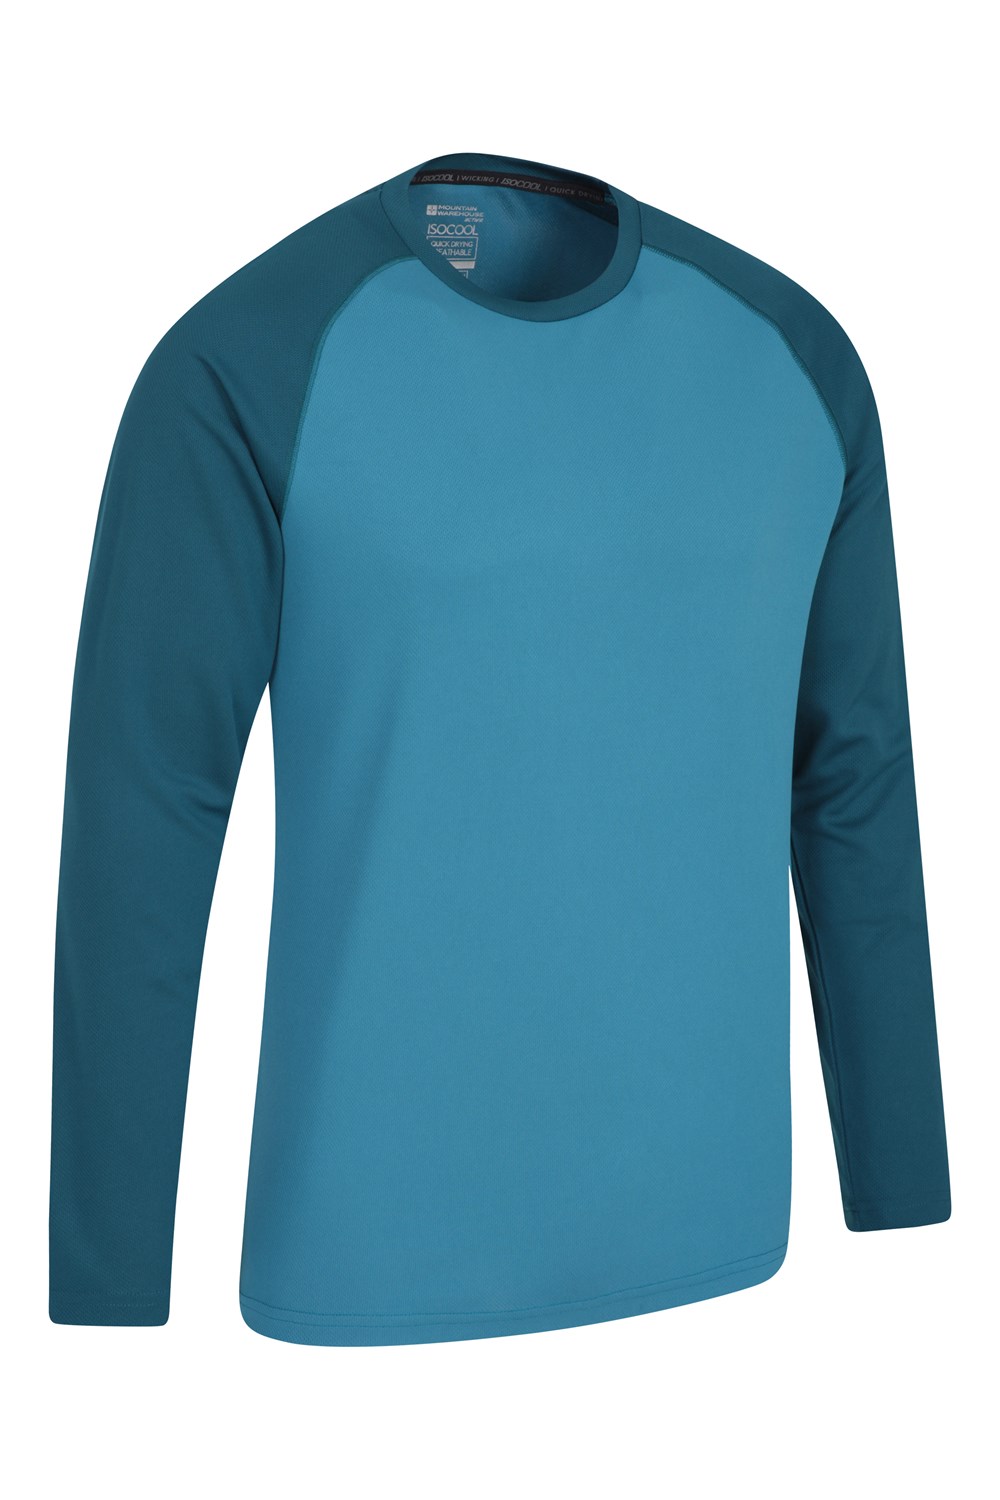 Mountain Warehouse Mens Long Sleeve Tshirt Tee UV Protection Gym Running  Walking | eBay